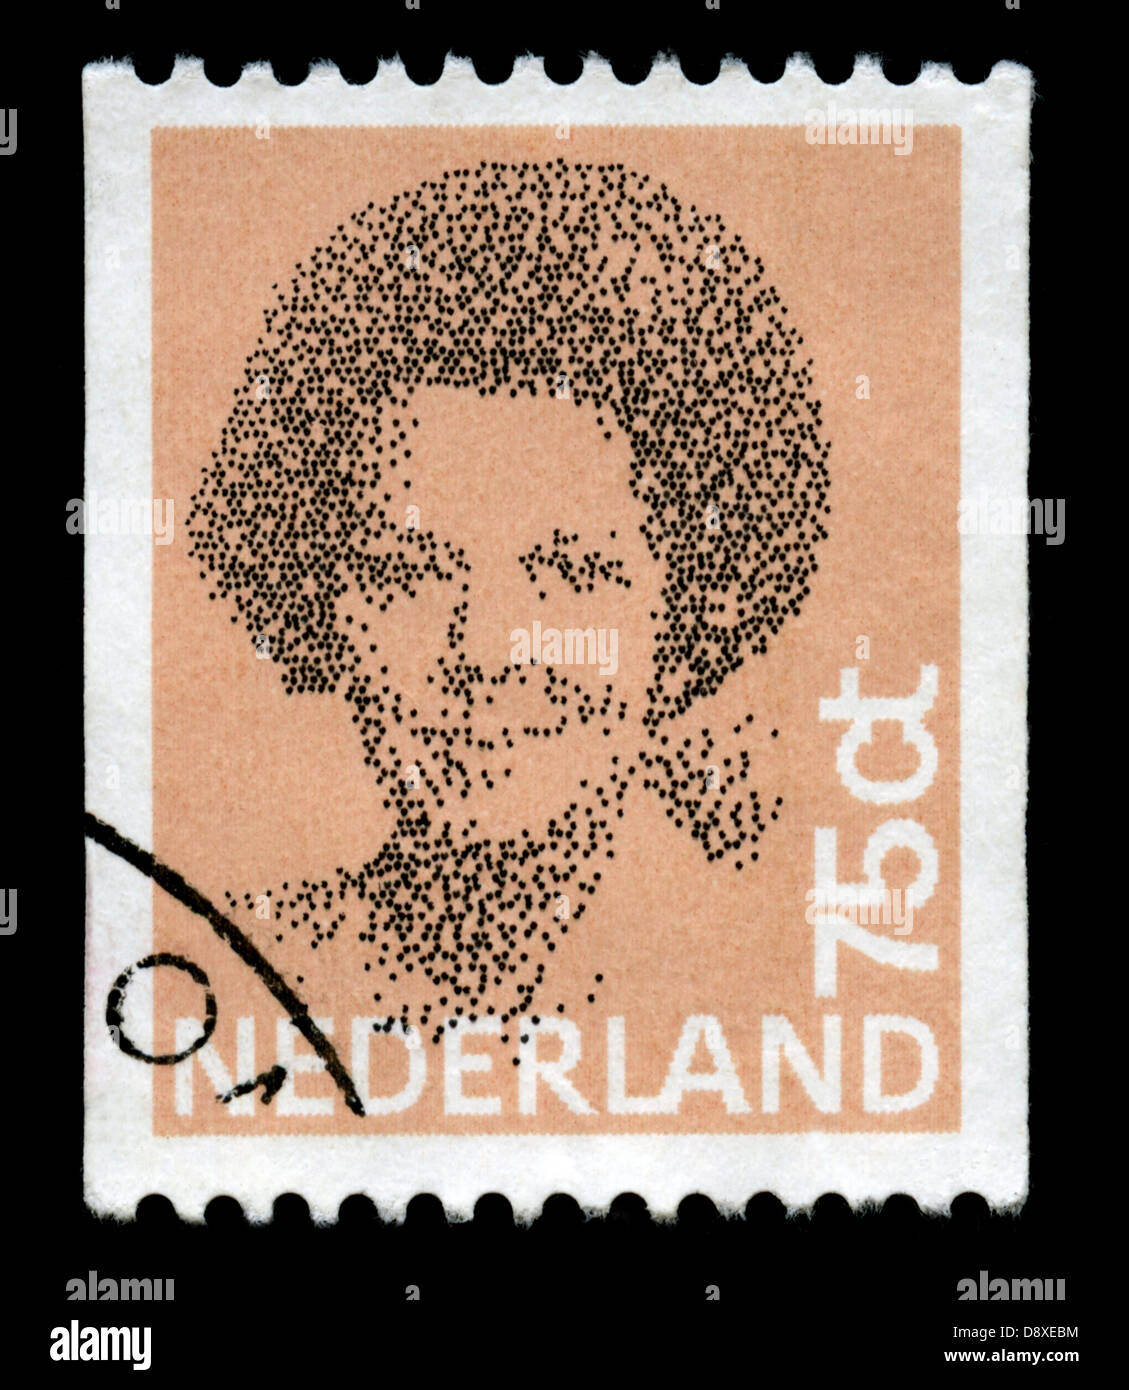 Netherlands postage stamp depicting queen Beatrix Stock Photo